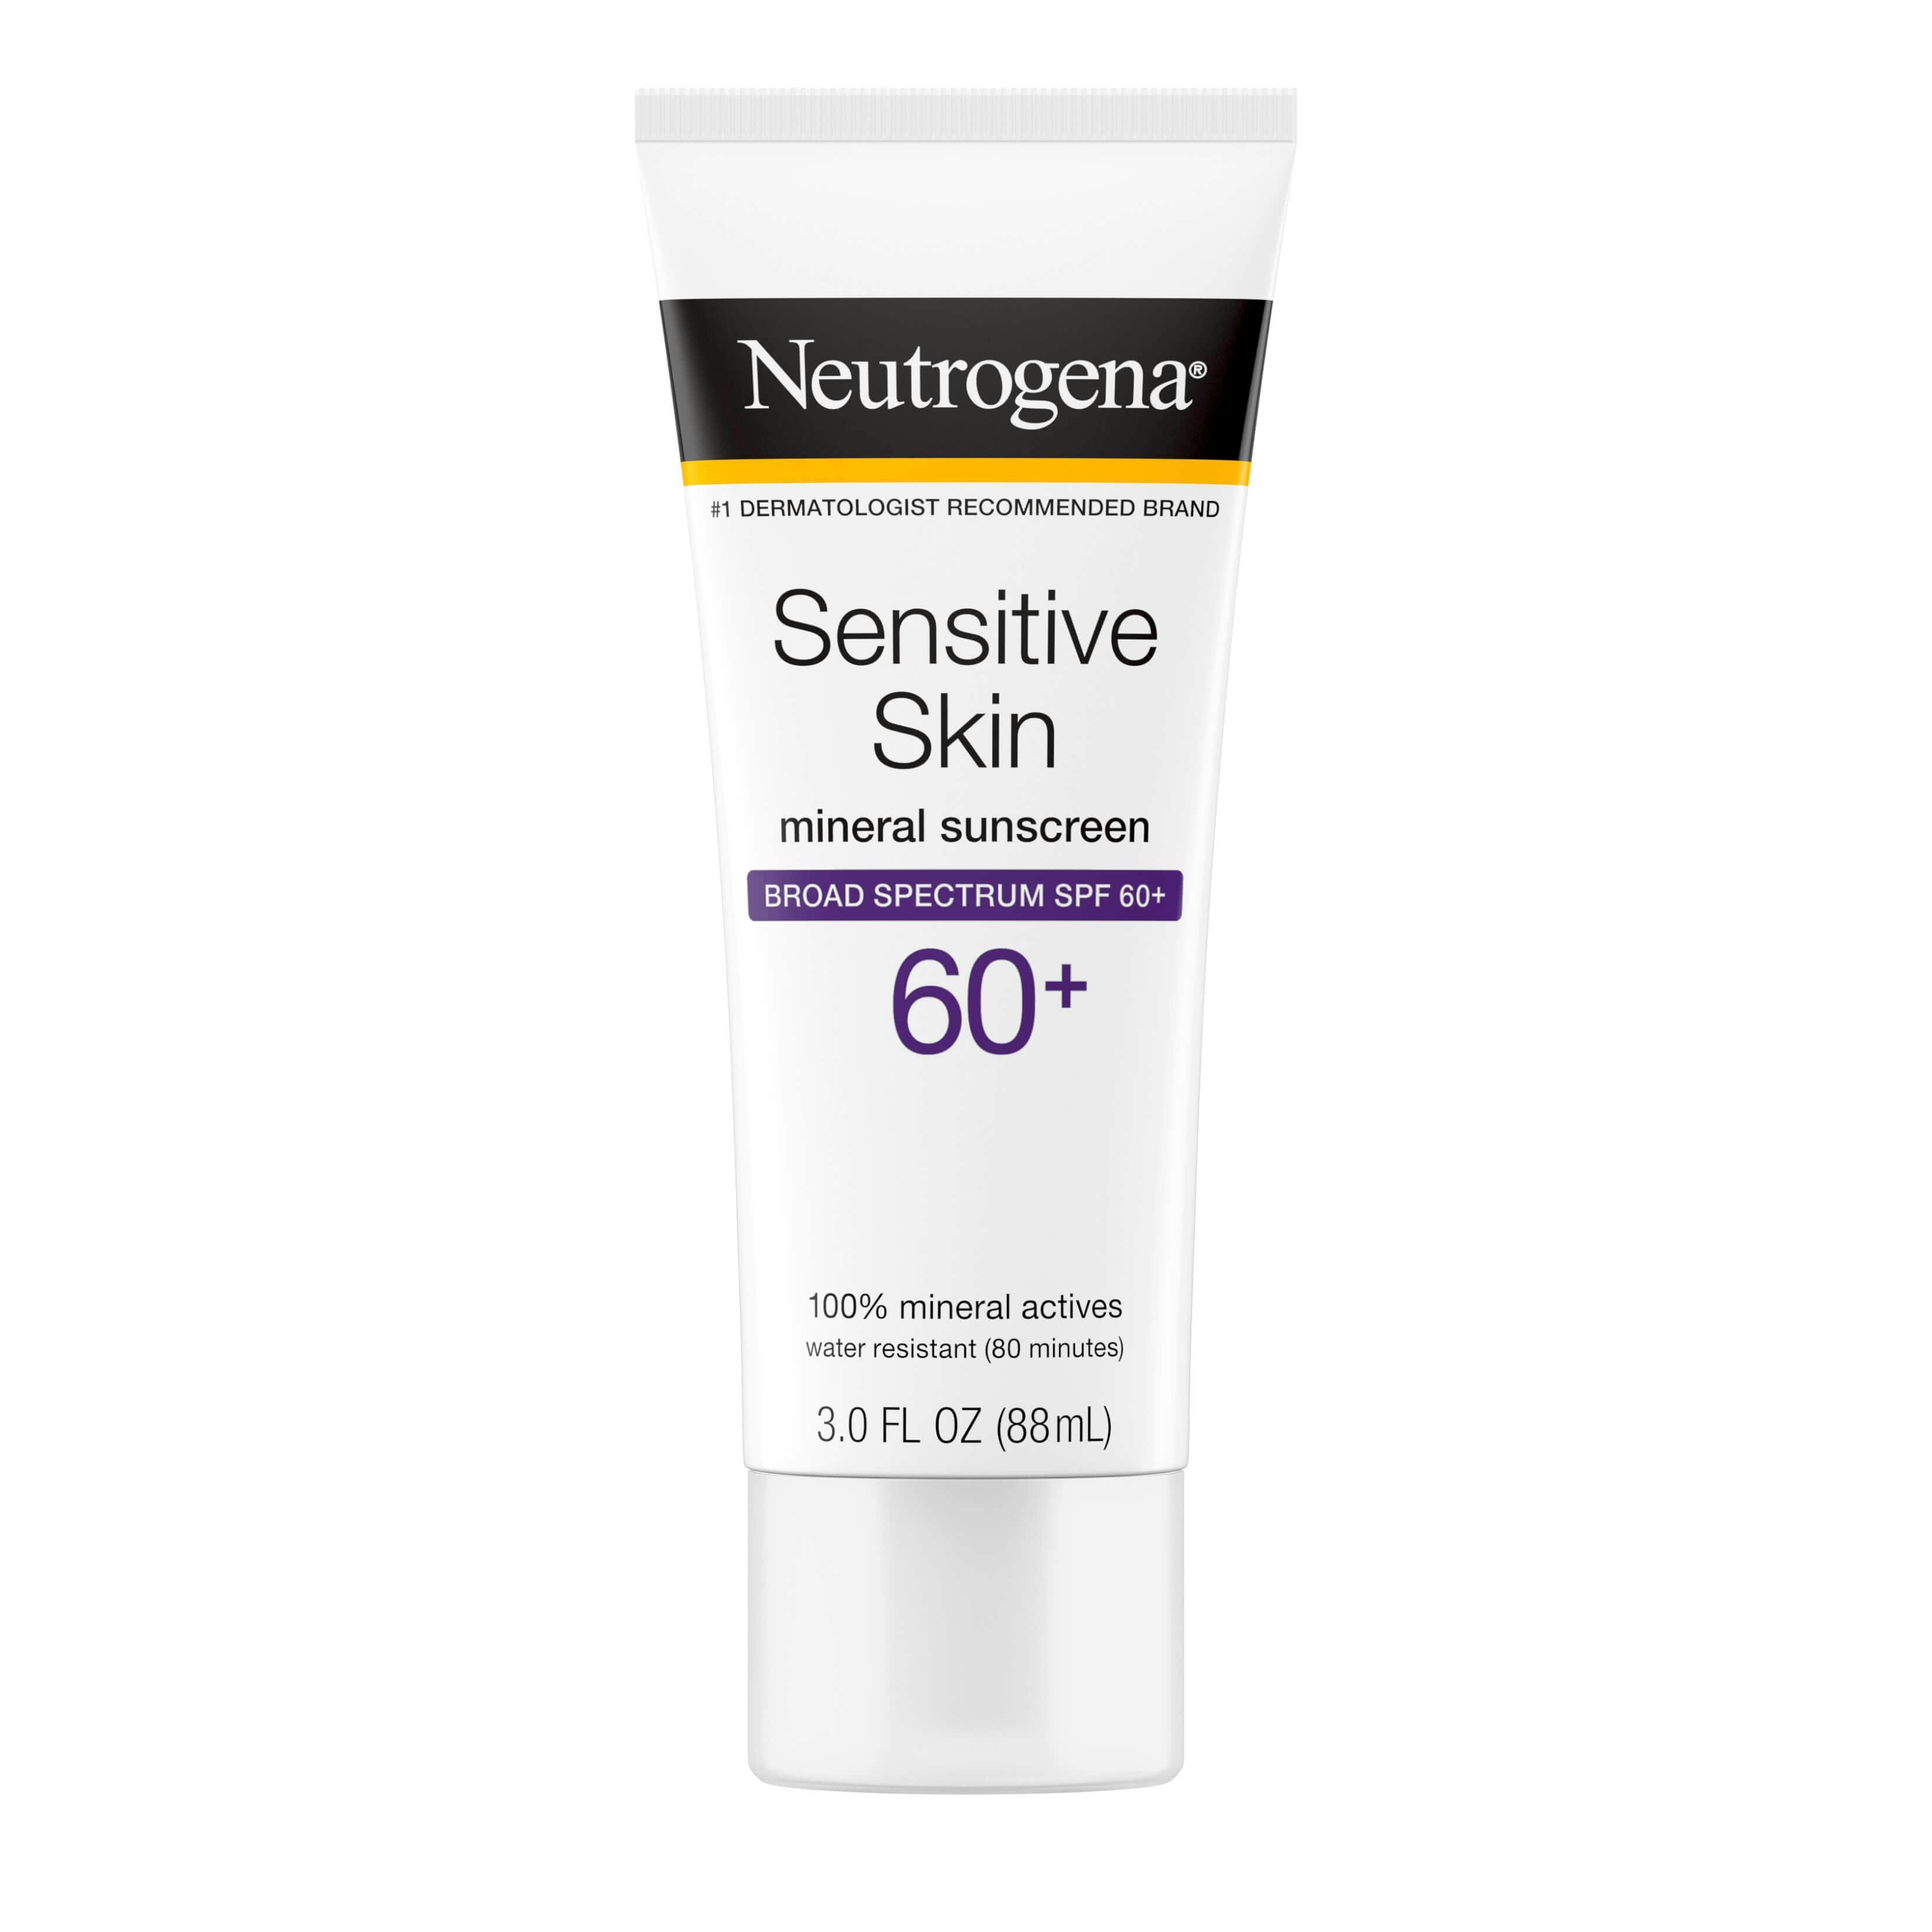 cetaphil sunscreen vs neutrogena sunscreen